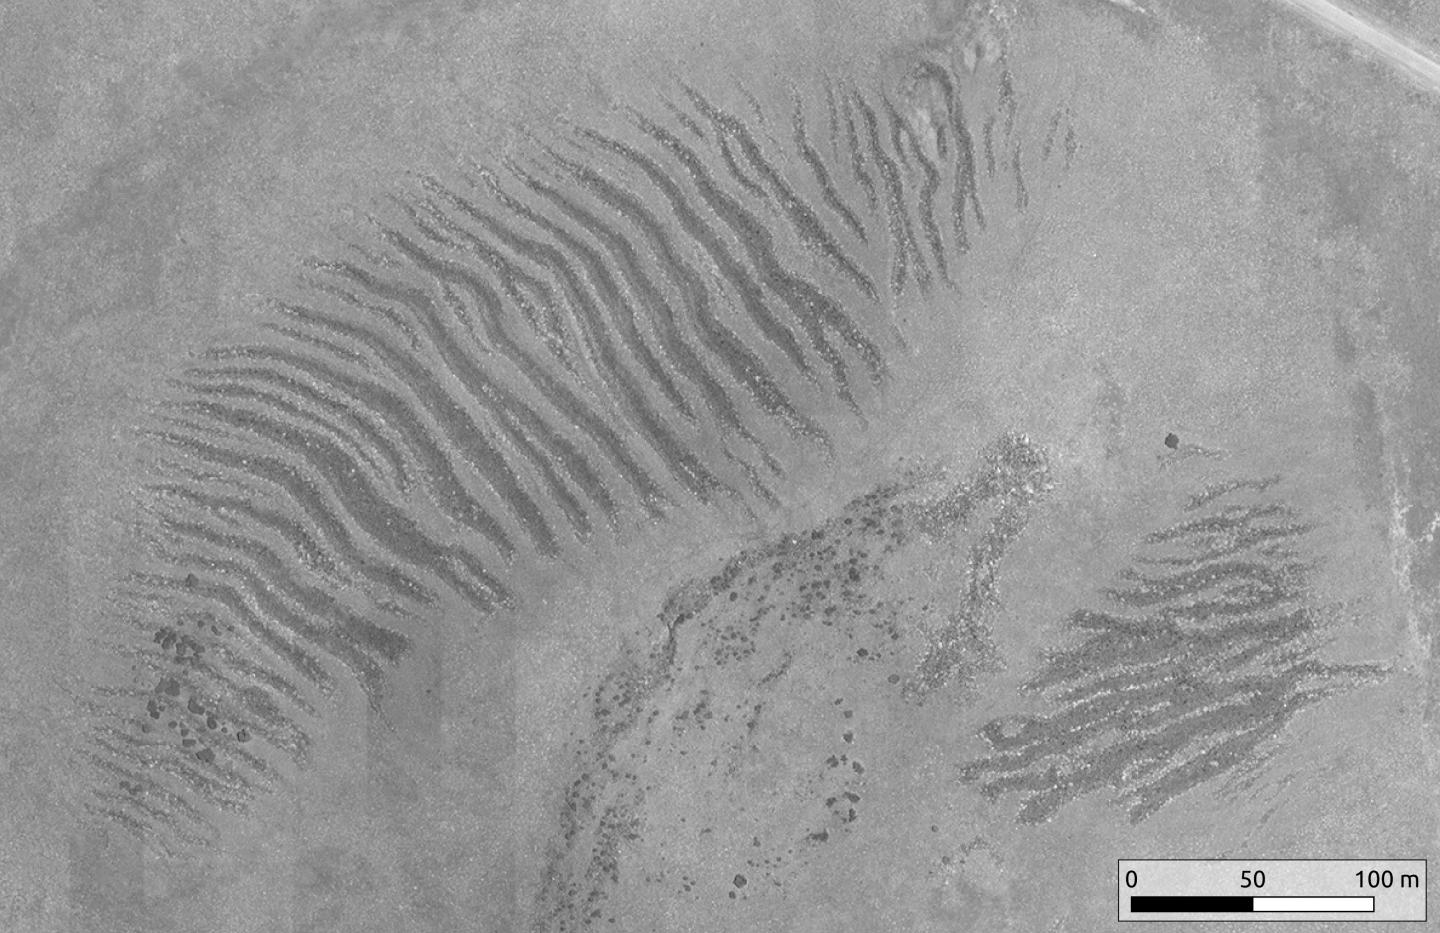 Stone Stripes Satellite image